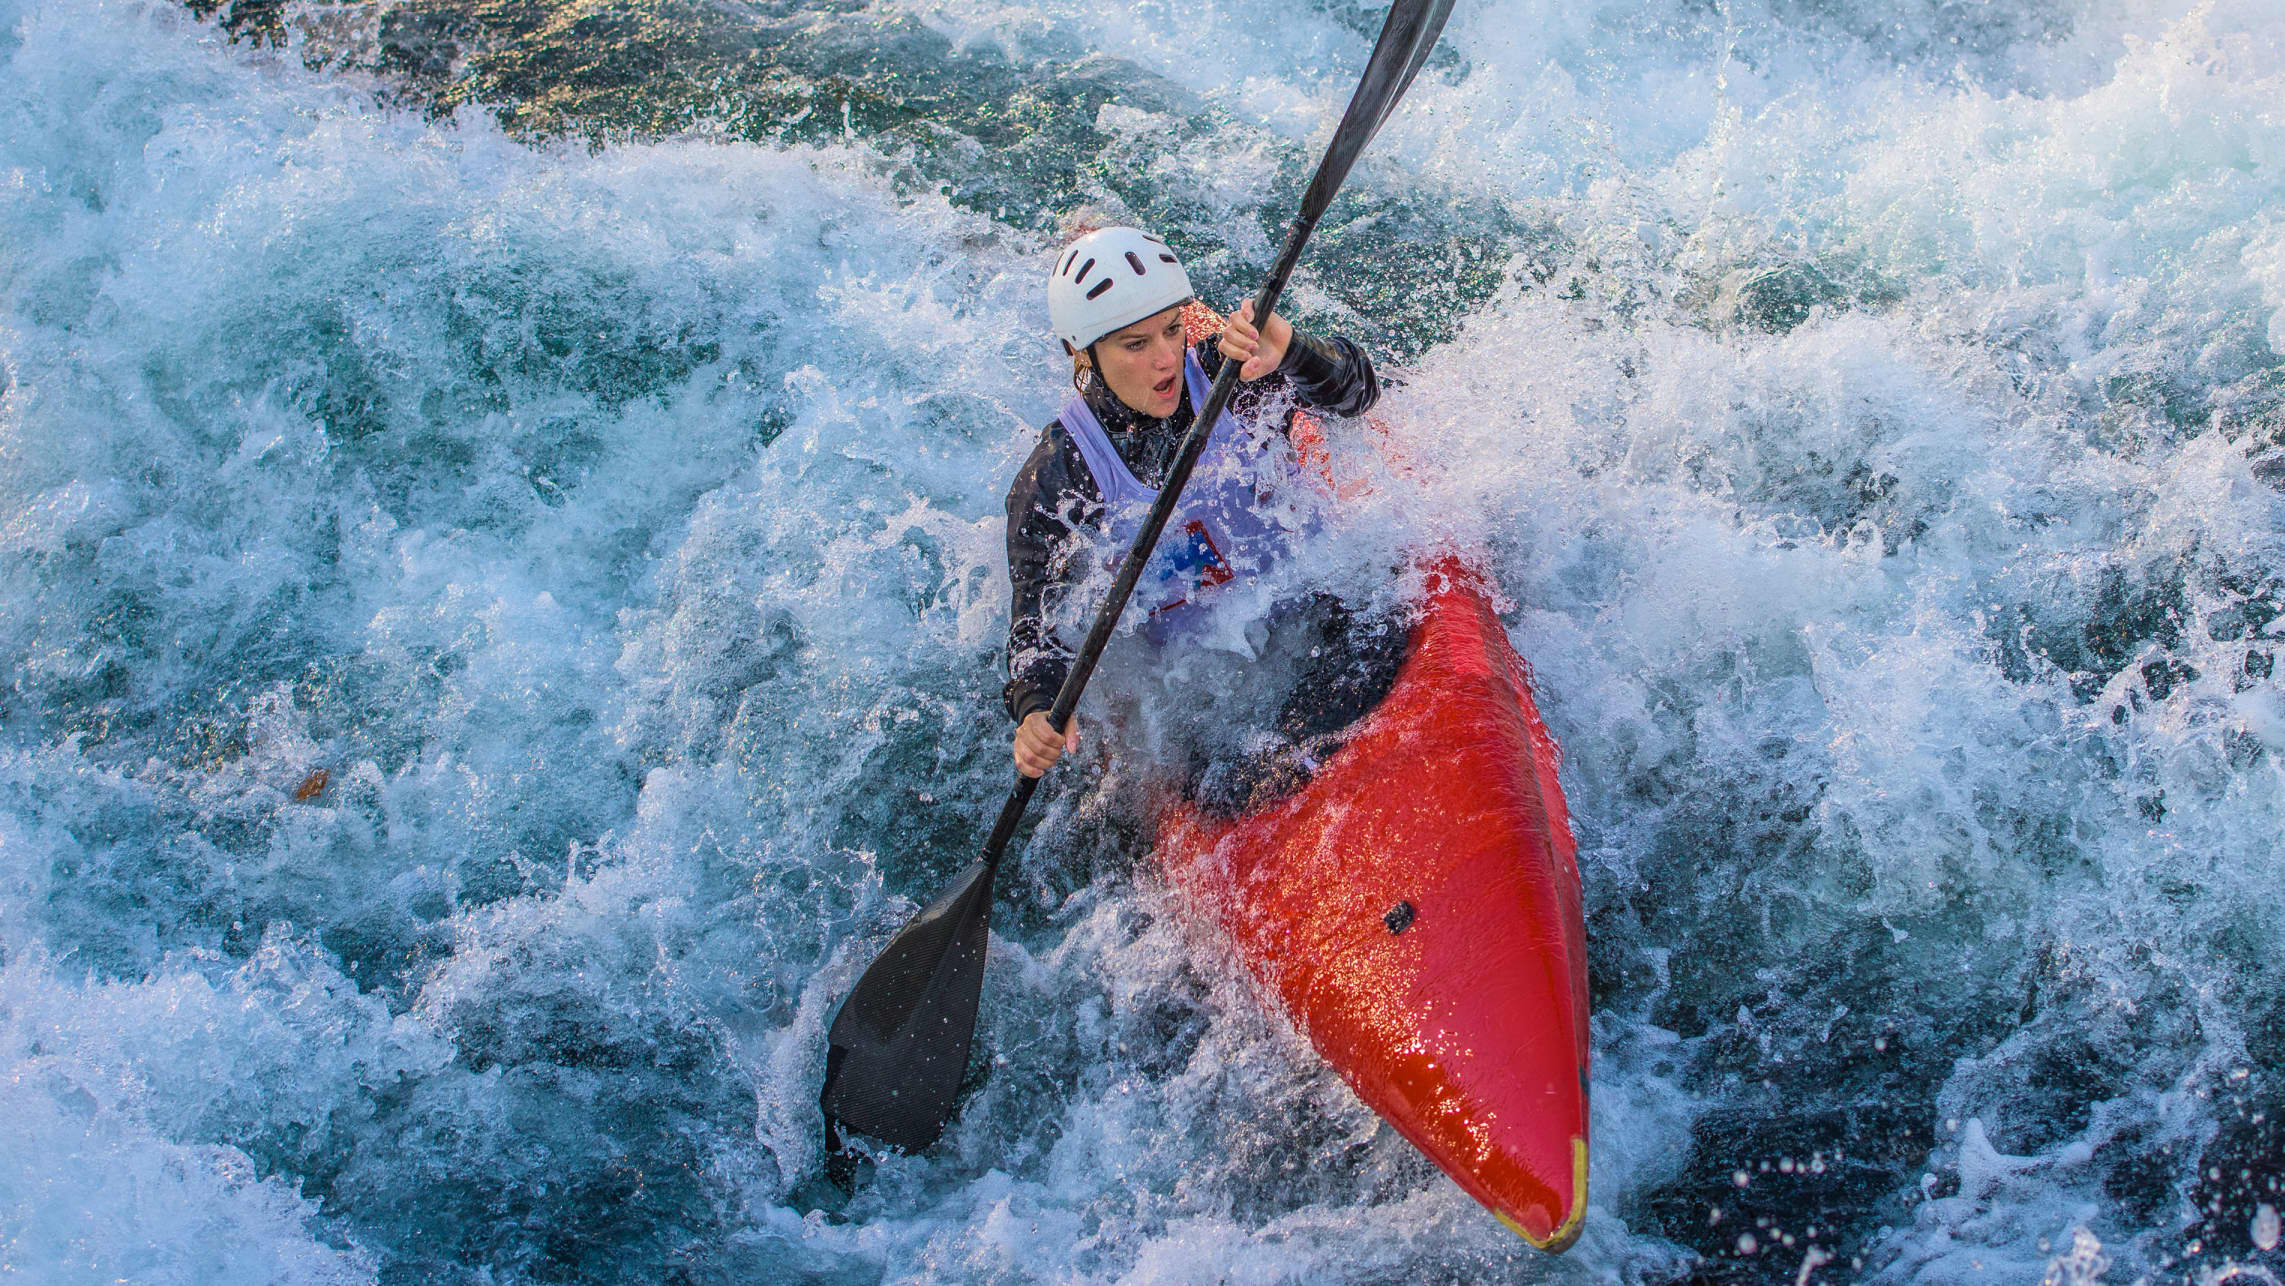 A kayaker braves white waves, hopefully avoiding an outdoor emergency or injury